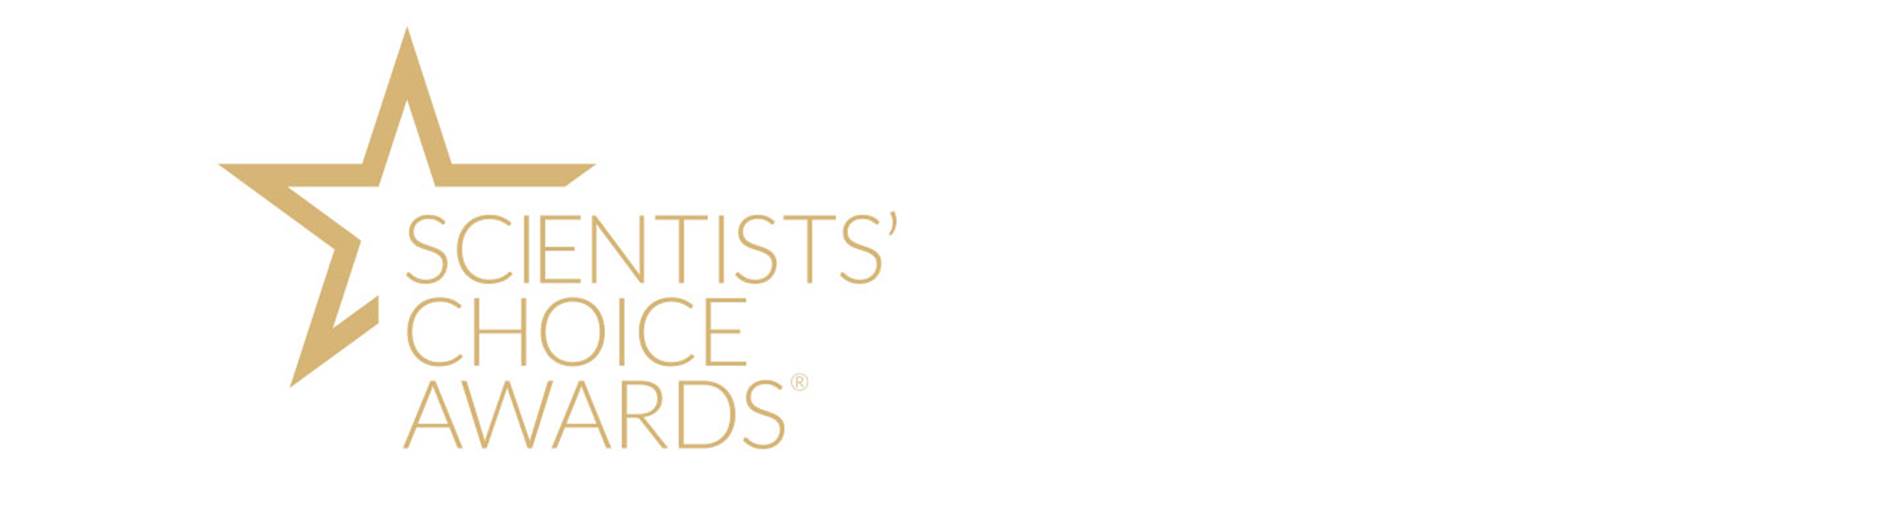 Scientists Choice Awards Logo Gold (2)